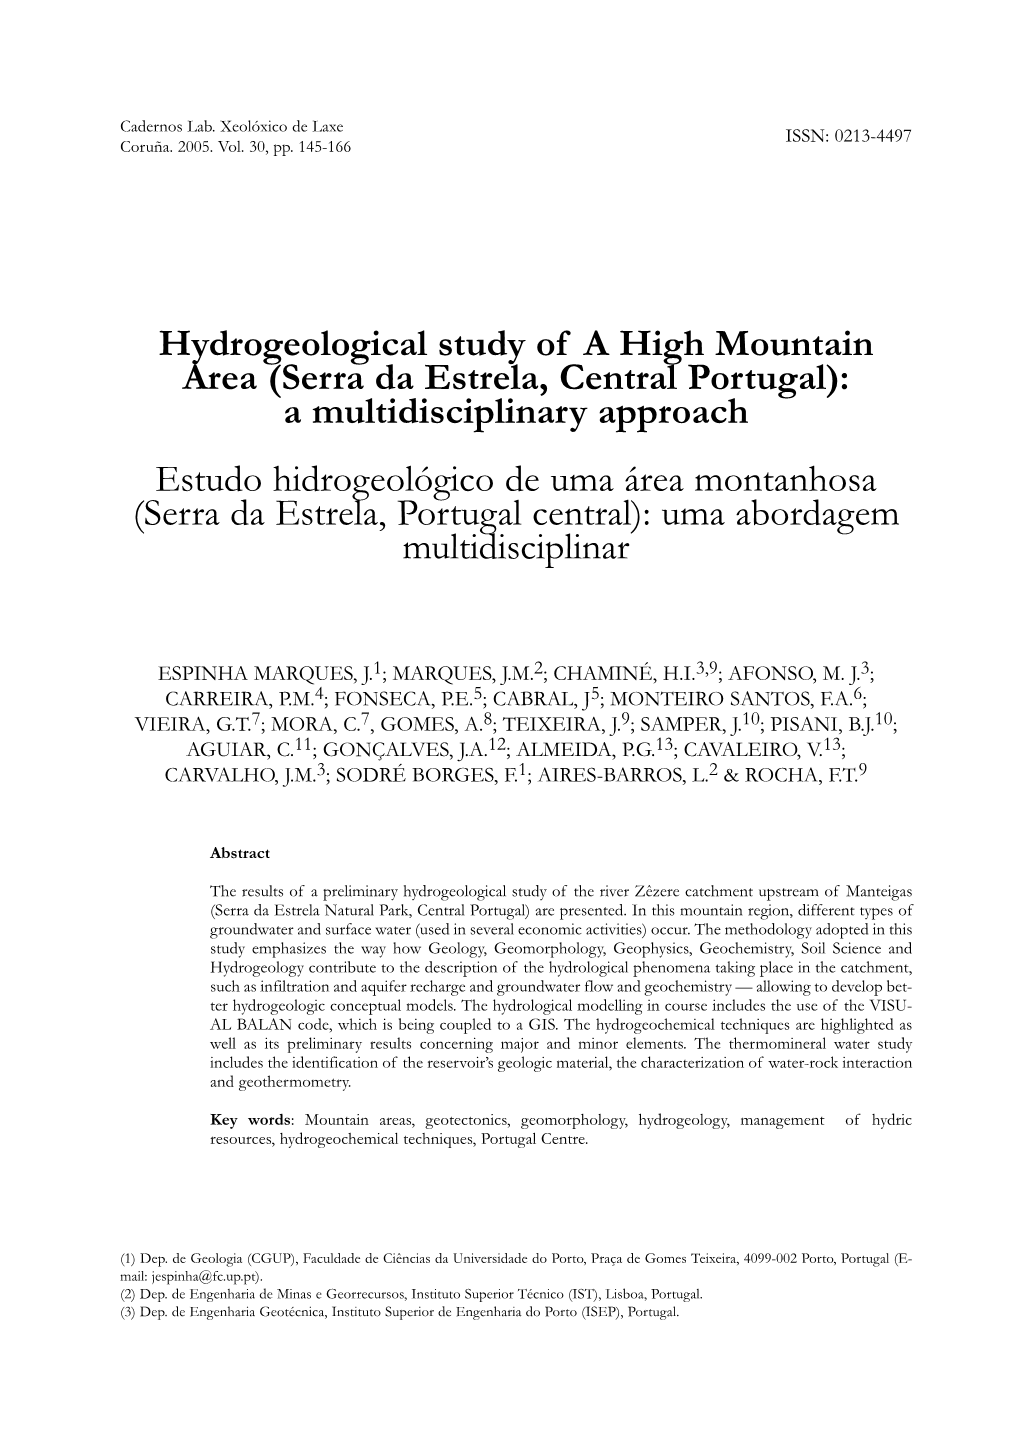 Hydrogeological Study of a High Mountain Area (Serra Da Estrela